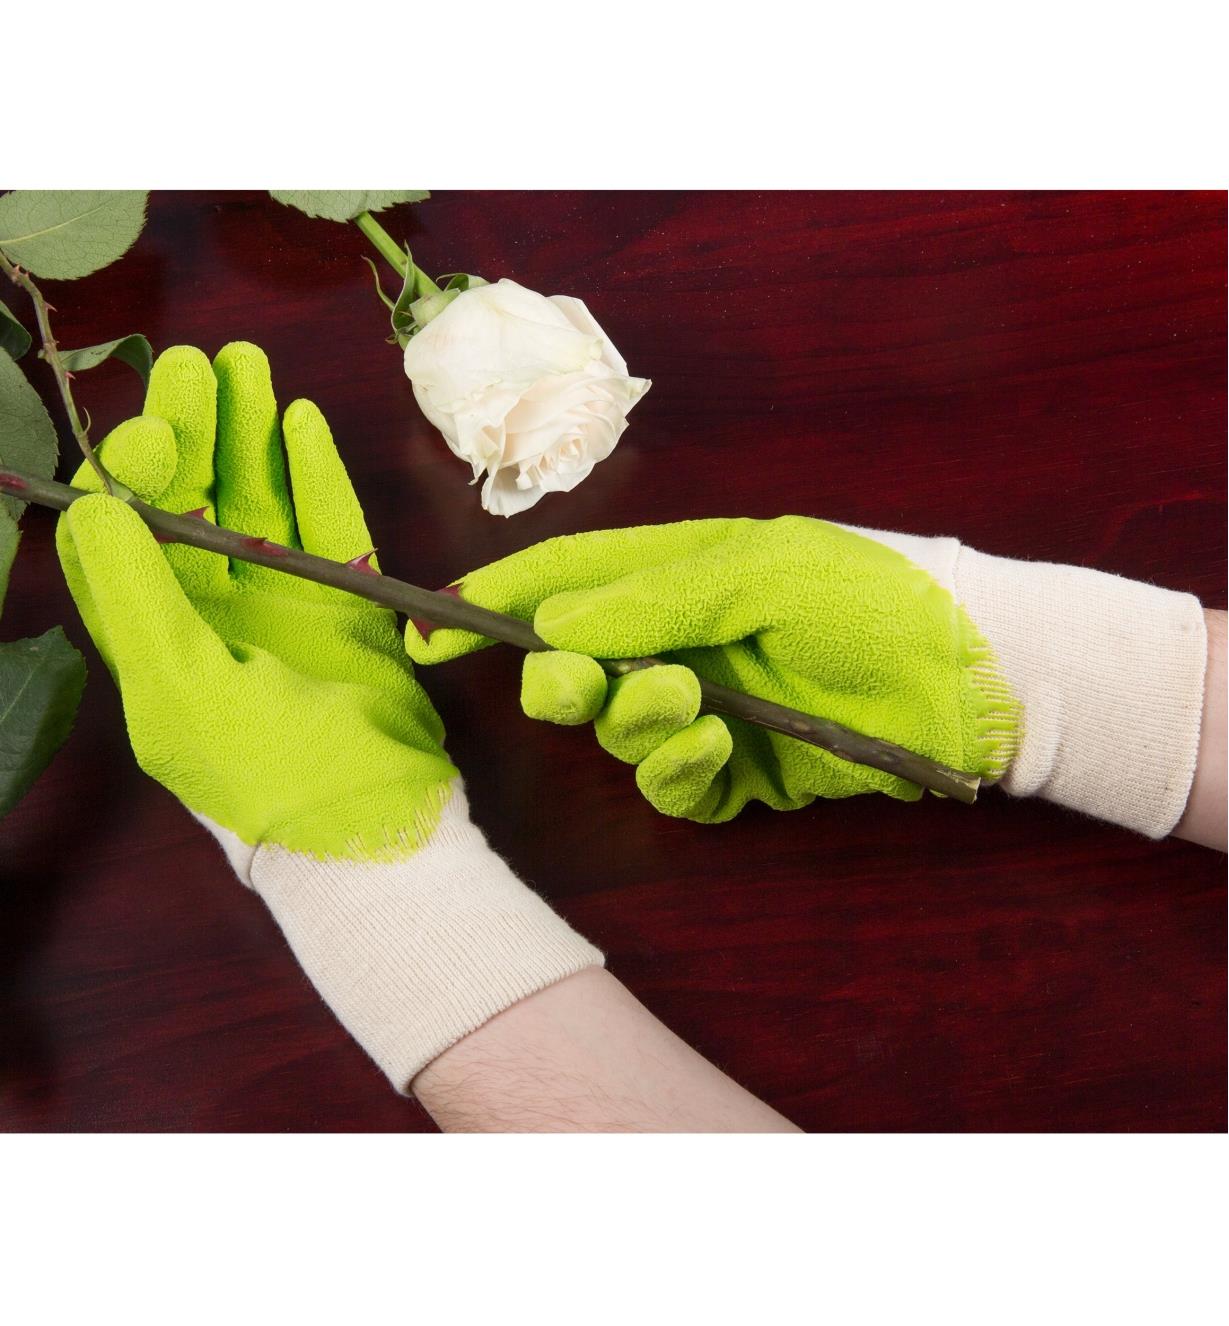 Mud Gloves Original Style Lime Gardening Gloves 020AG Case of 6 